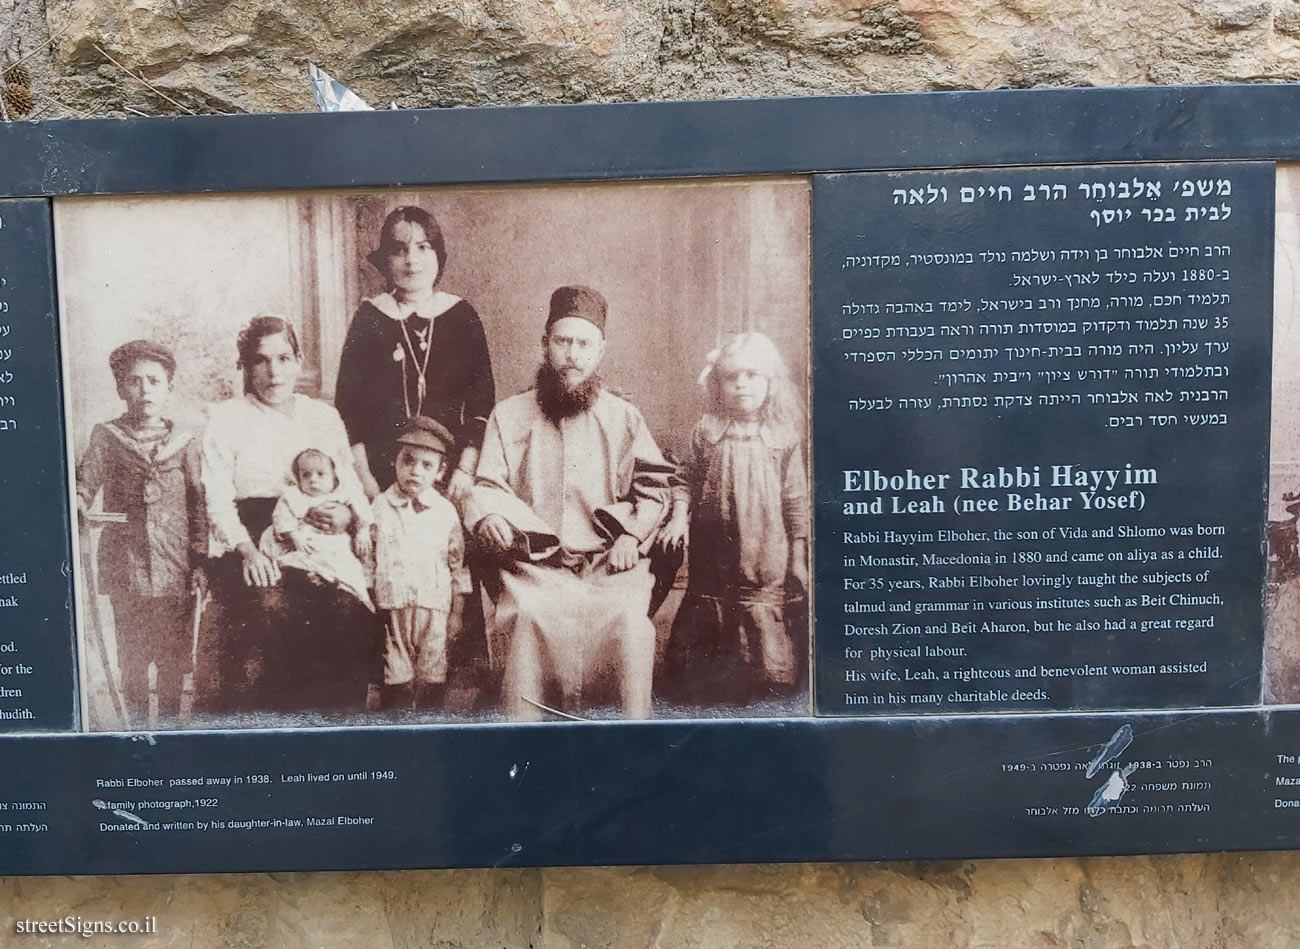 Jerusalem - Photograph in stone - Ohel Moshe - Elboher Rabbi Hayyim